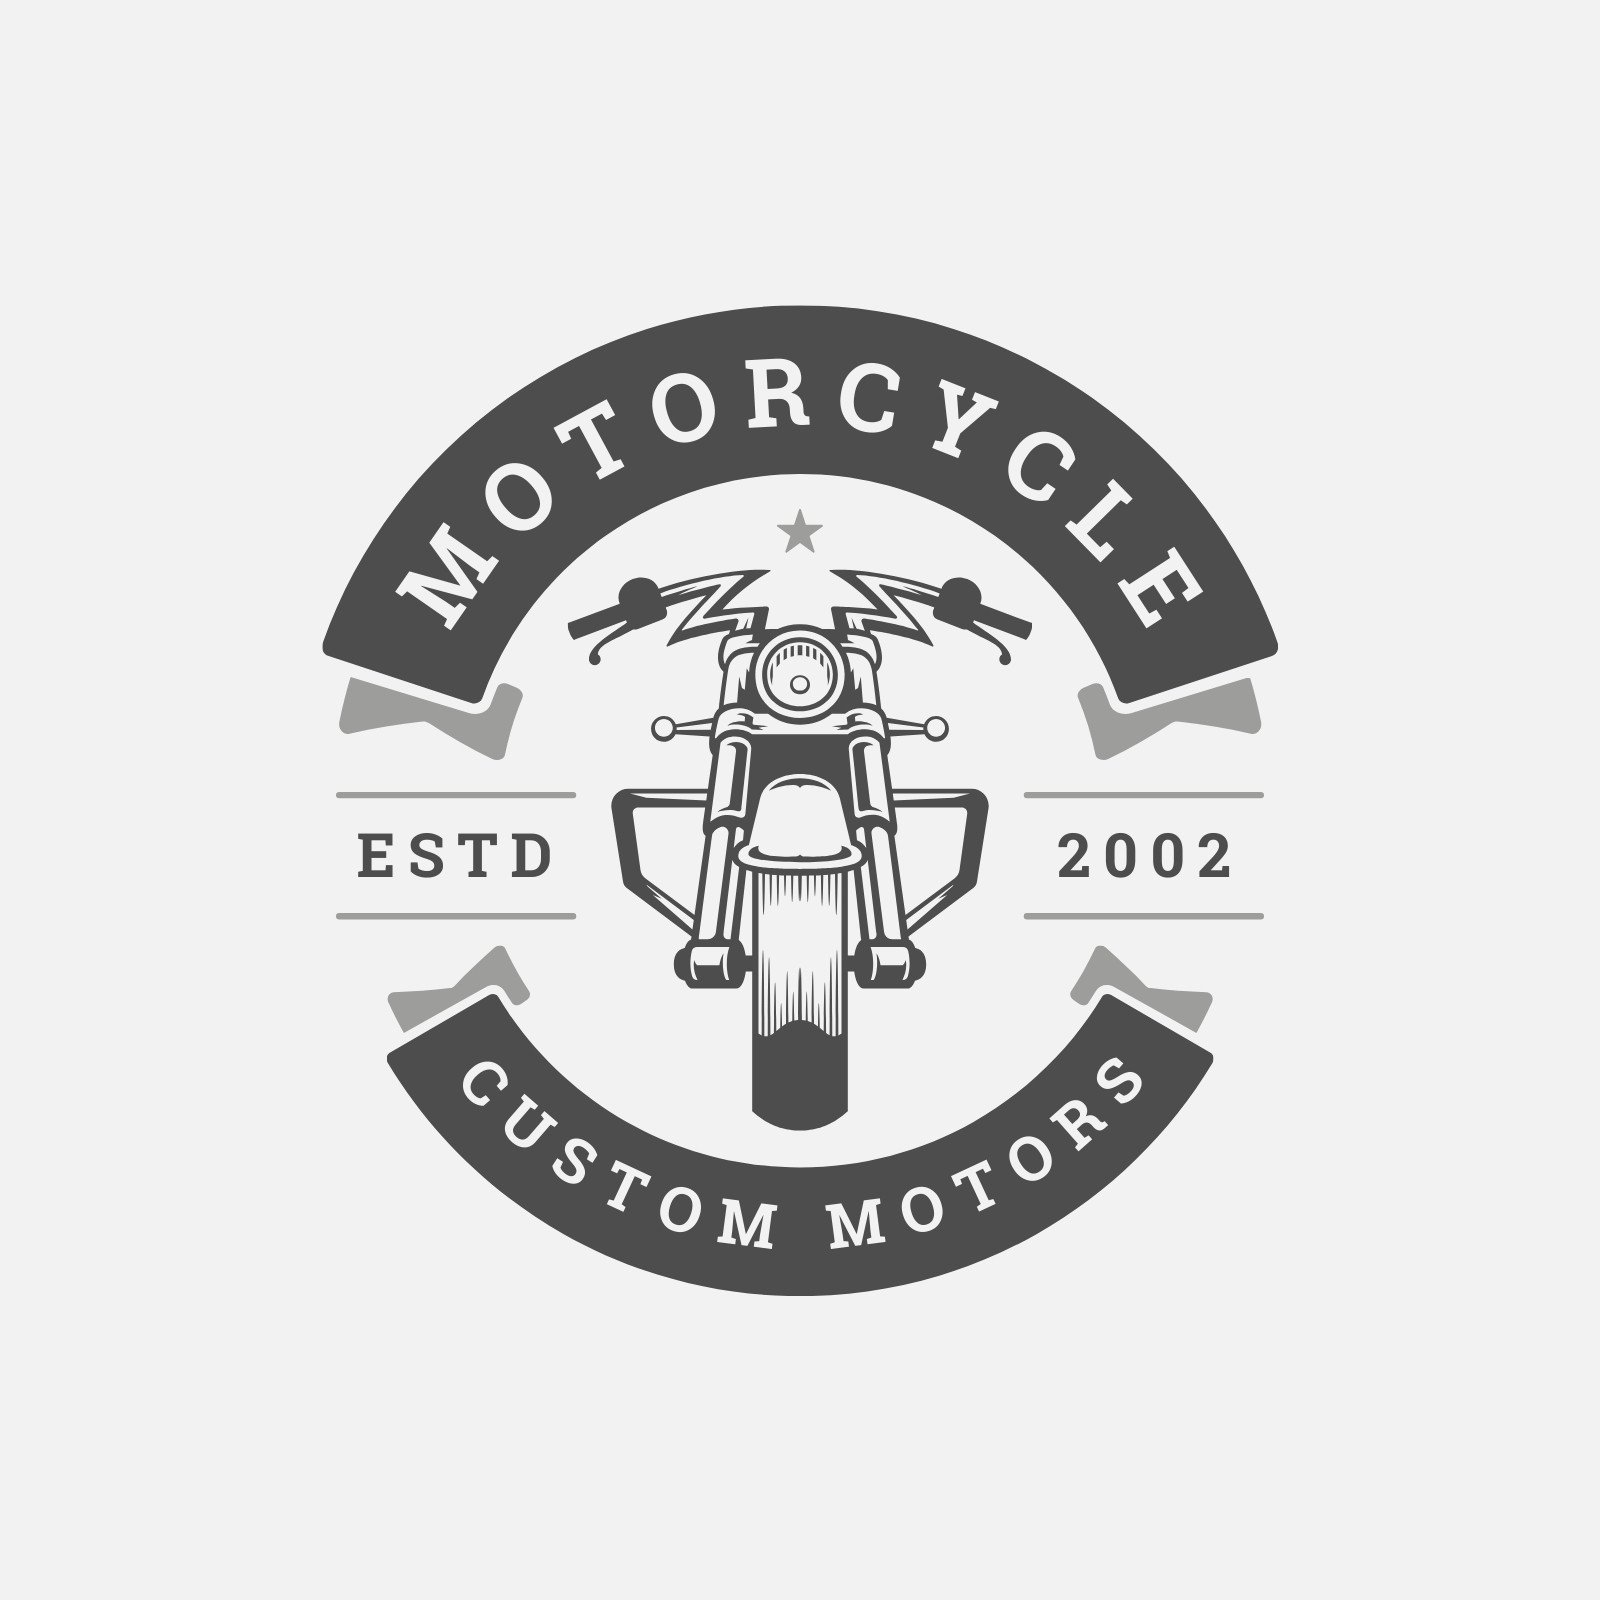 Bike Garage Vector Images (over 6,500)